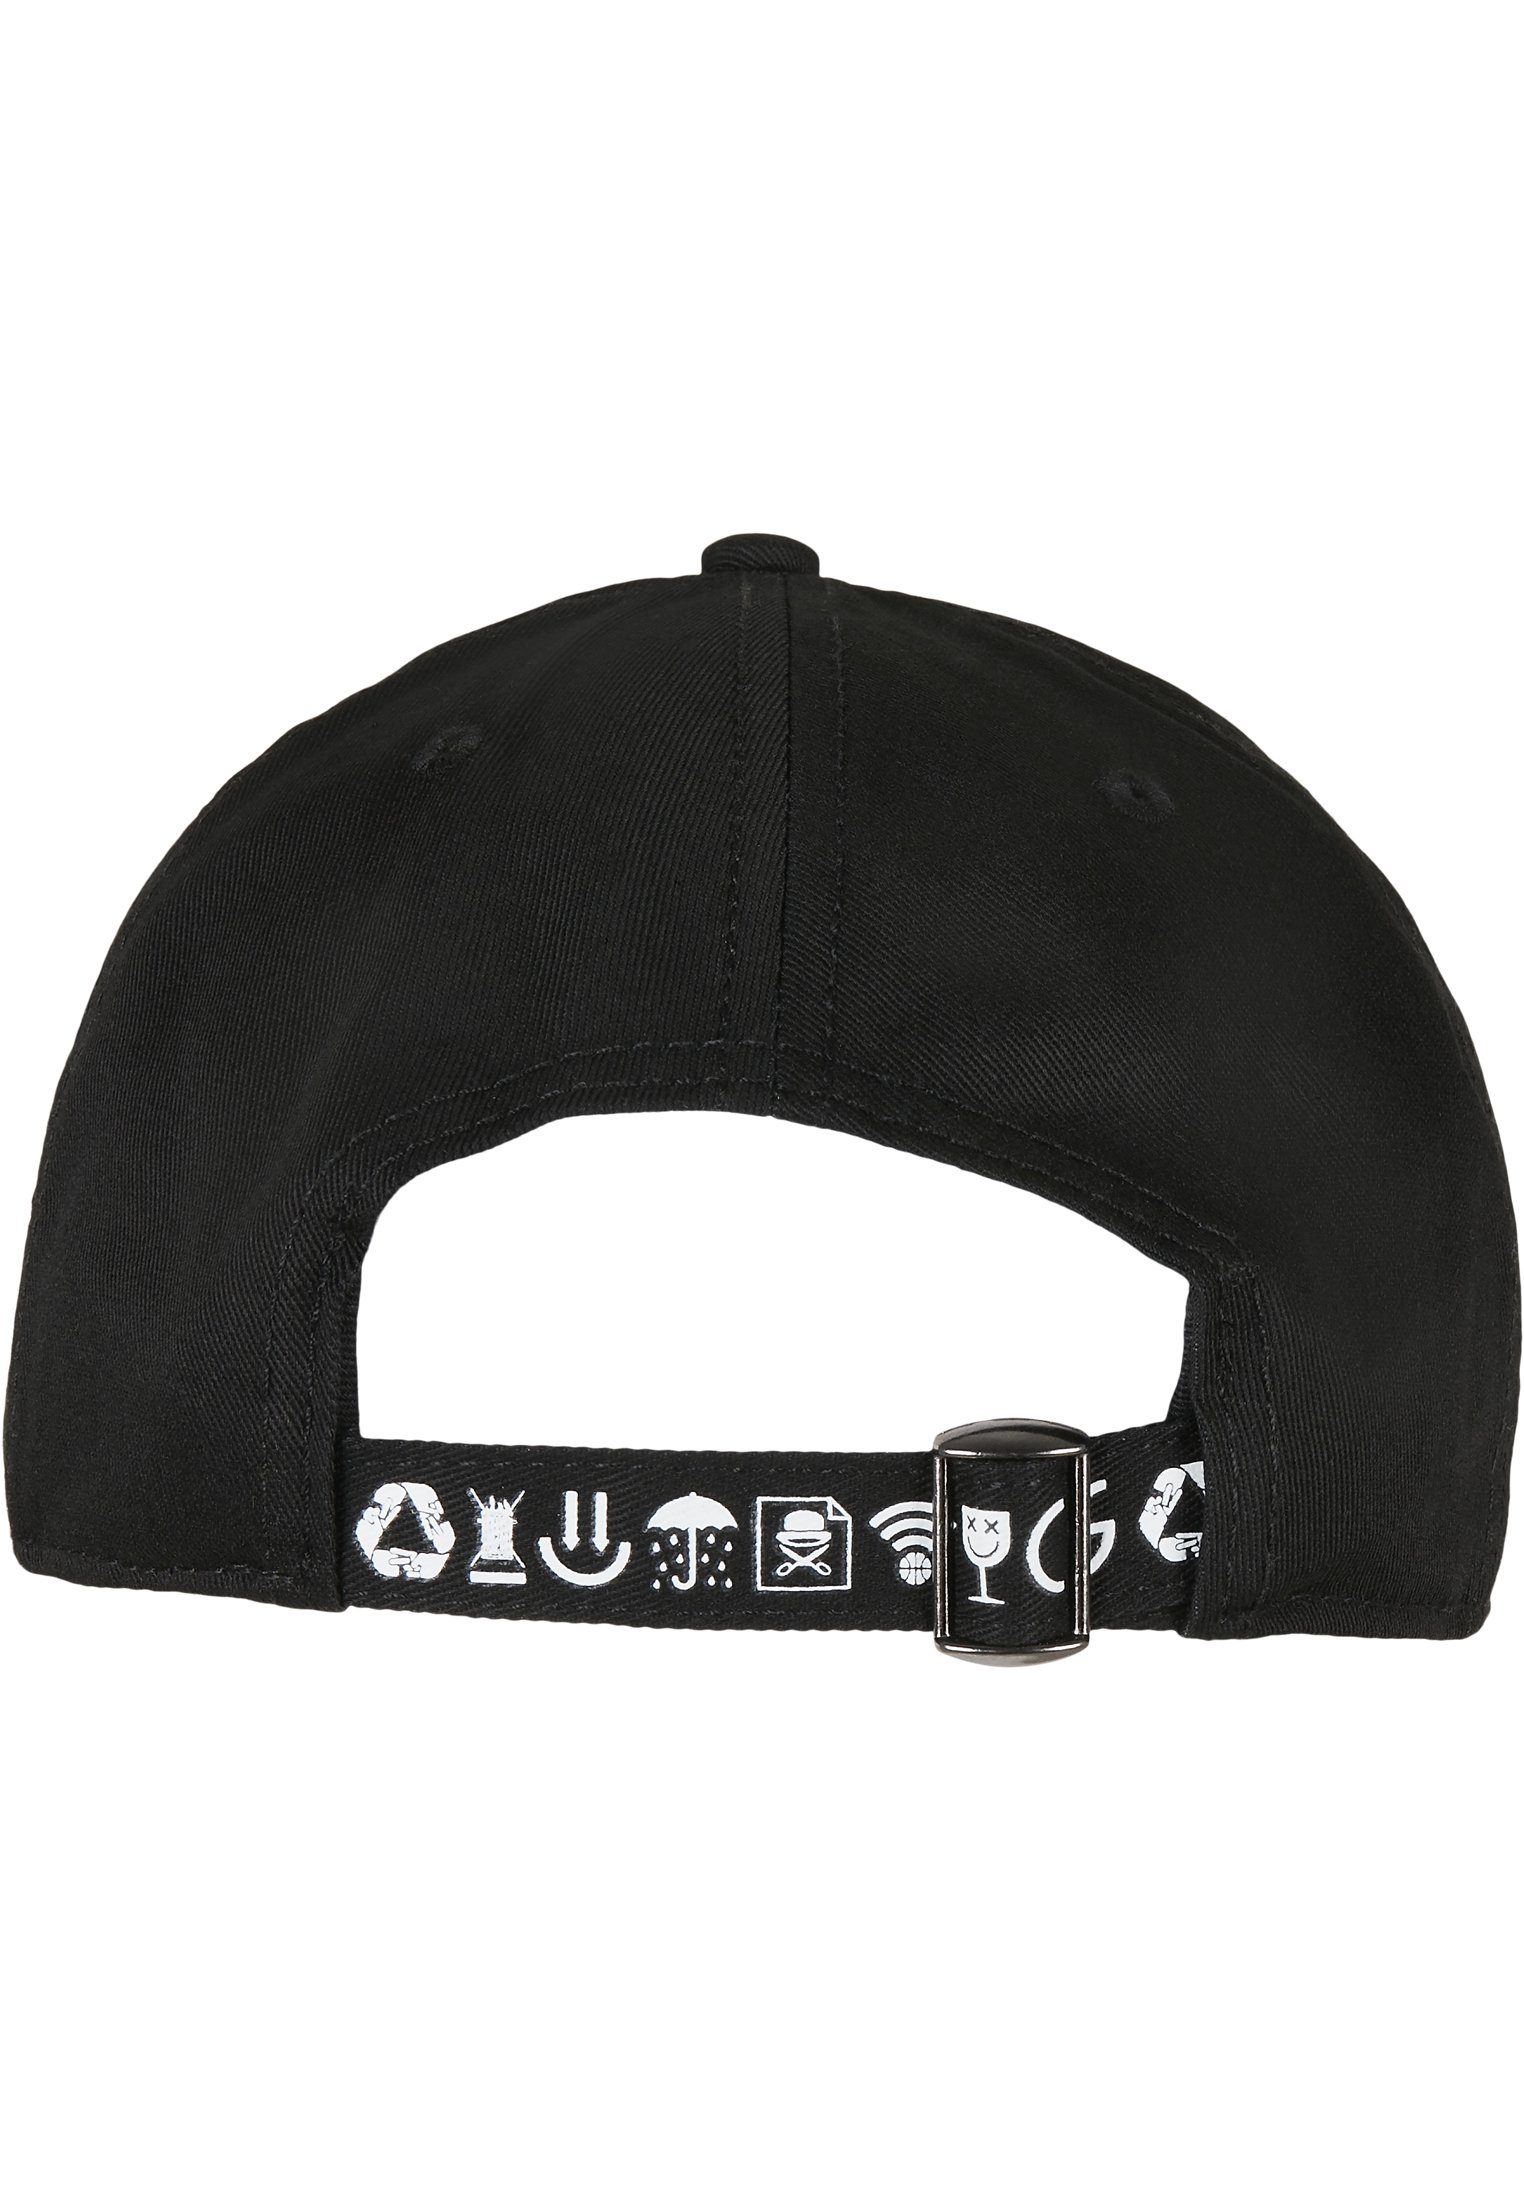 CAYLER & SONS Flex C&S black/white Iconic Cap Curved Cap Peace